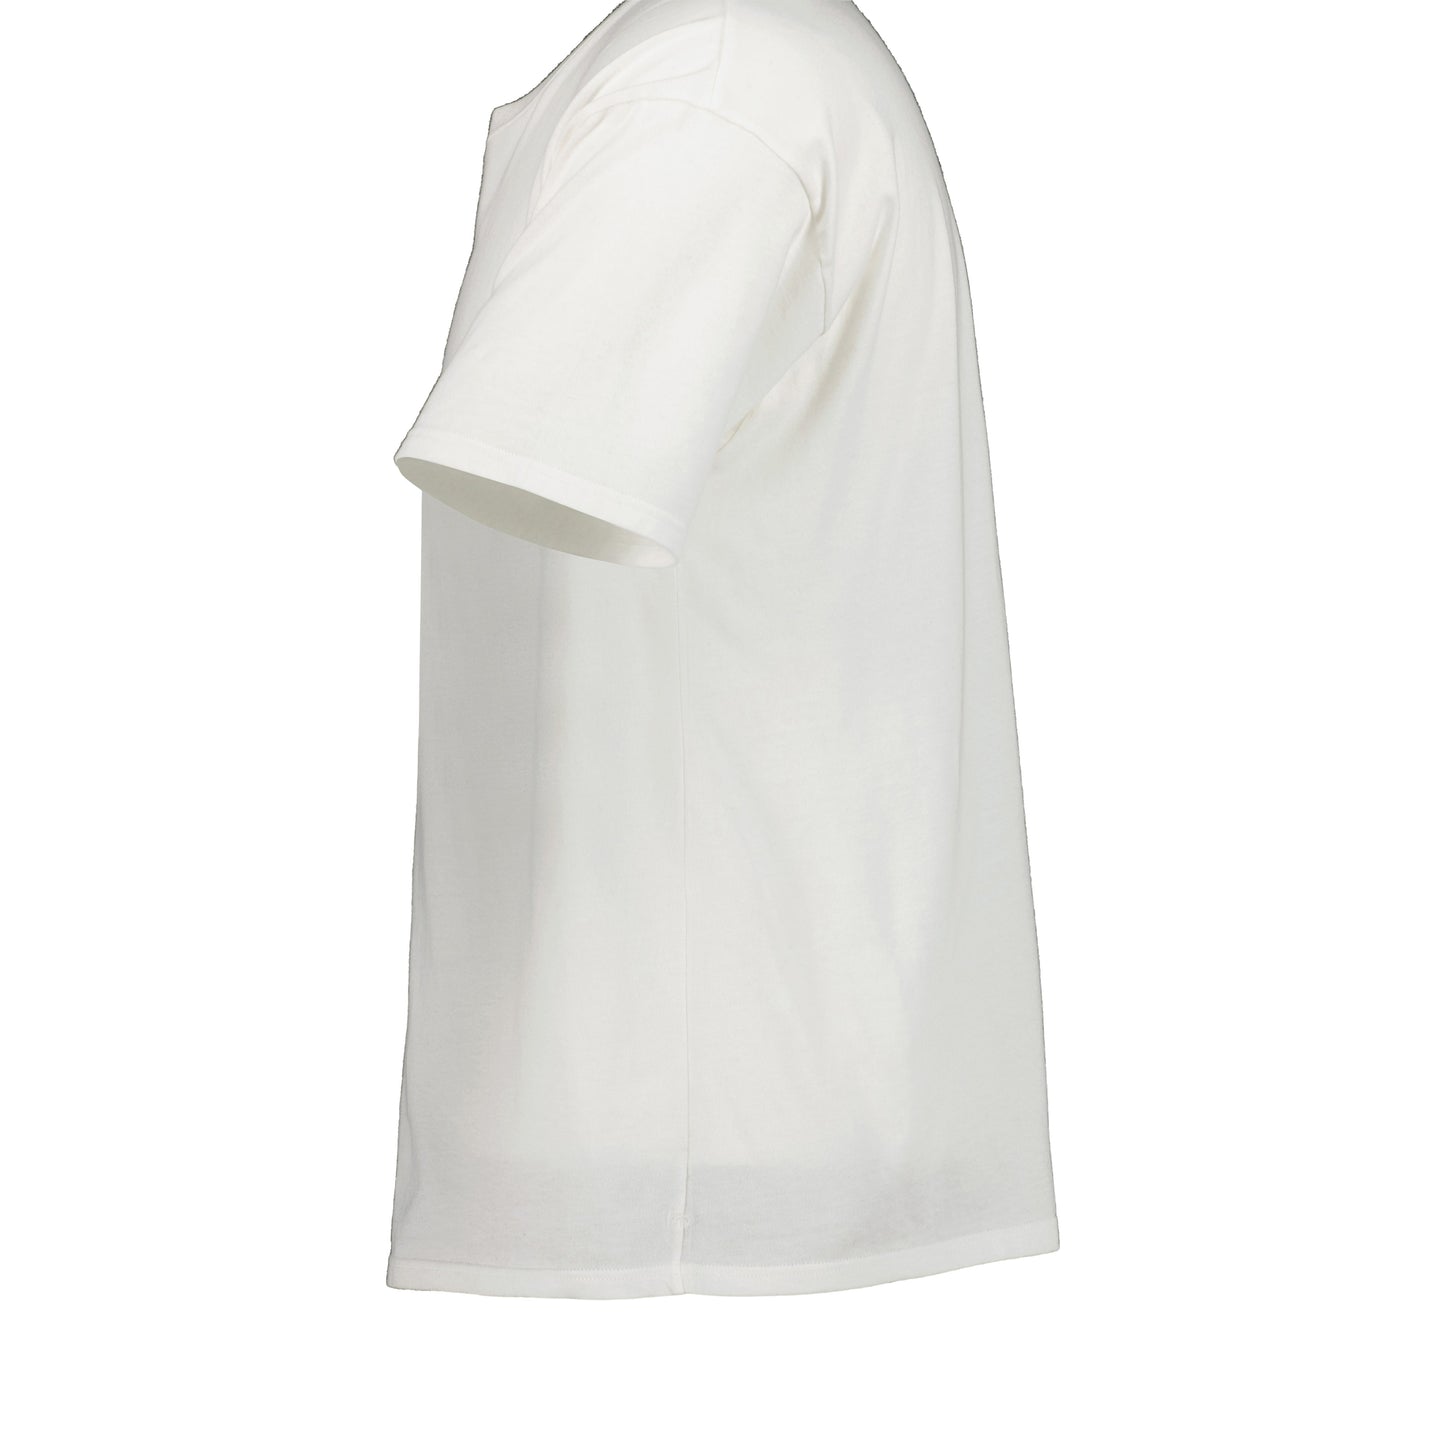 Peter Jersey Cotton T Shirt White